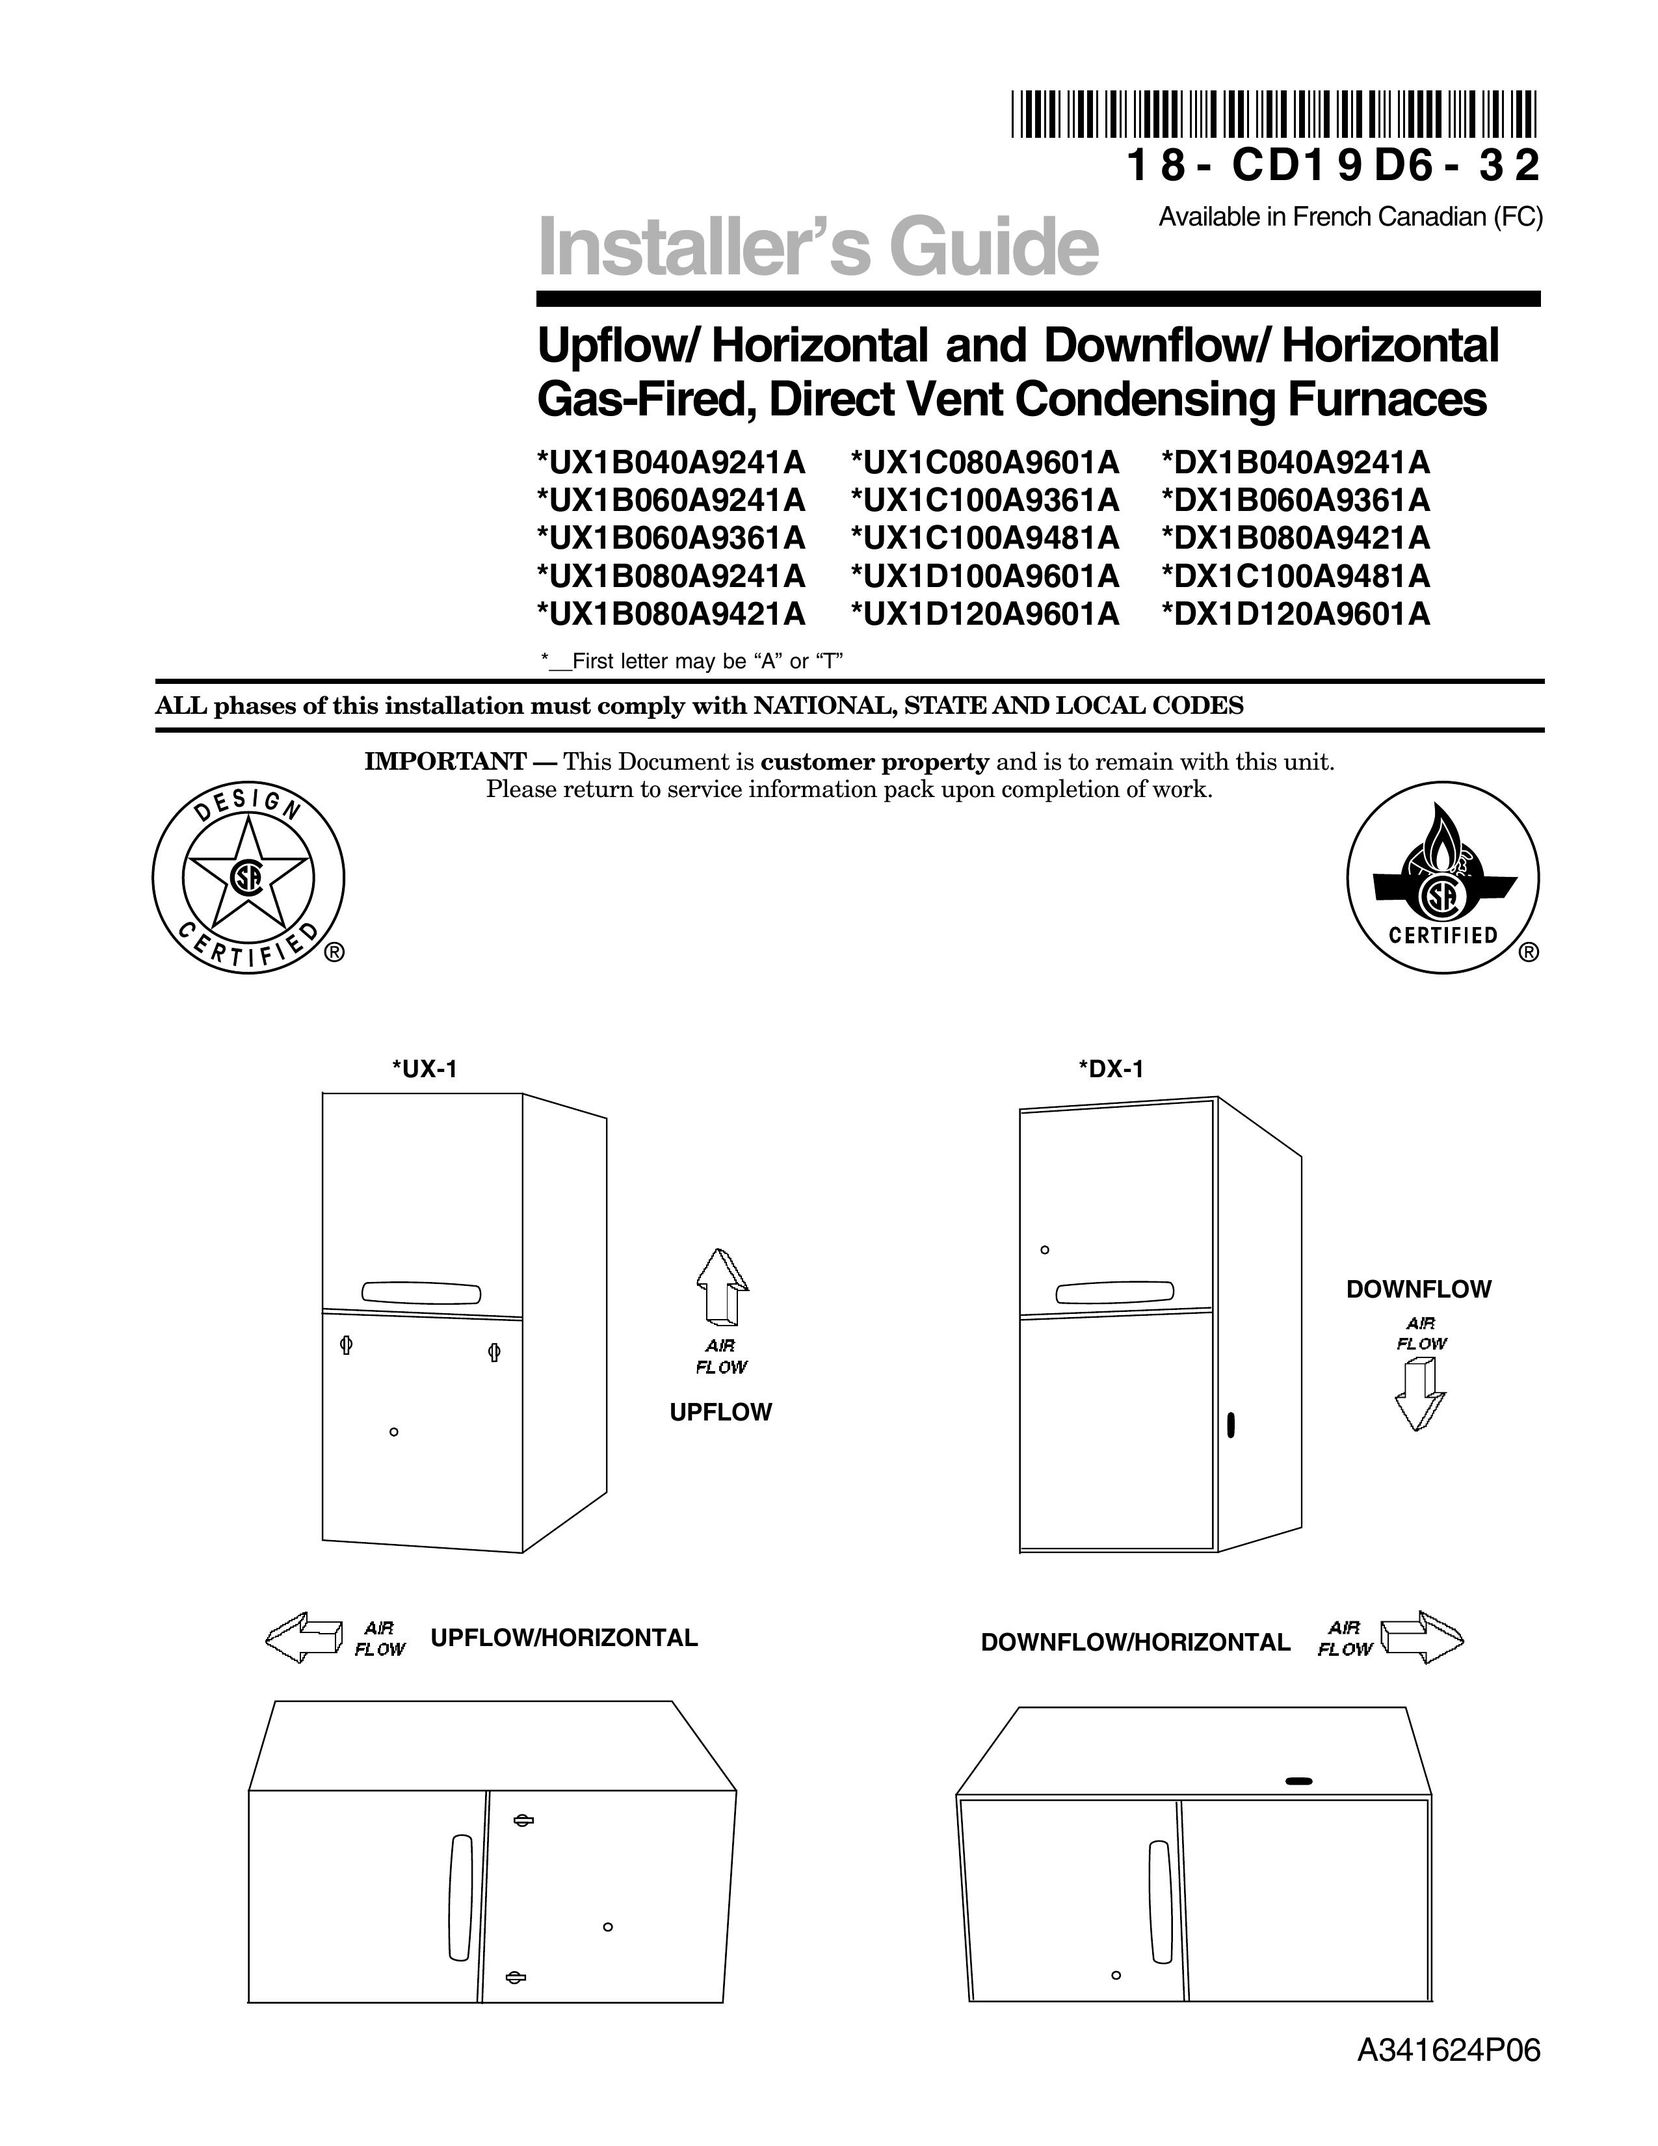 Trane UX1B060A9361A Furnace User Manual